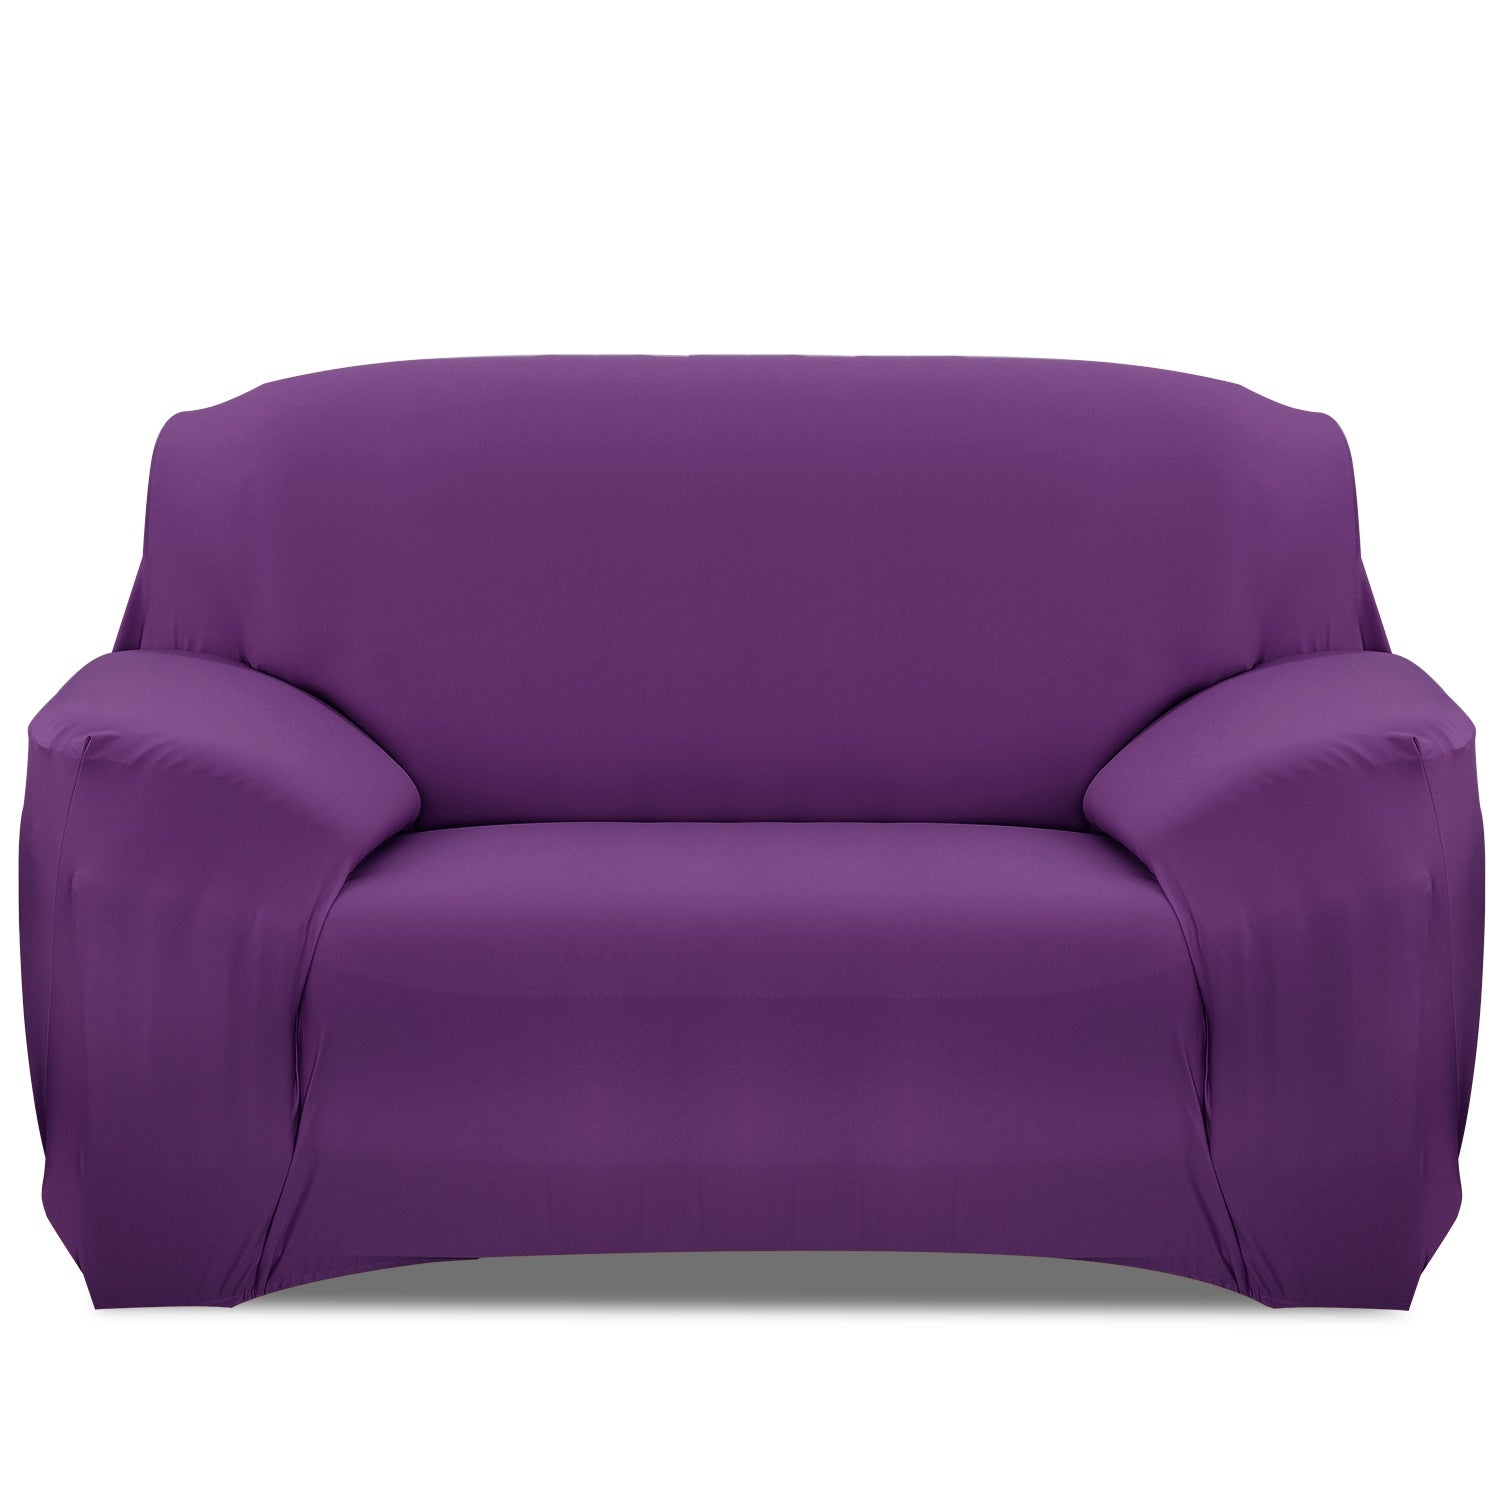 title:Sofa Cover Printed Stretch Sofa Furniture Cover Soft Sofa Slipcover Polyester Furniture Protector Cover;color:Purple